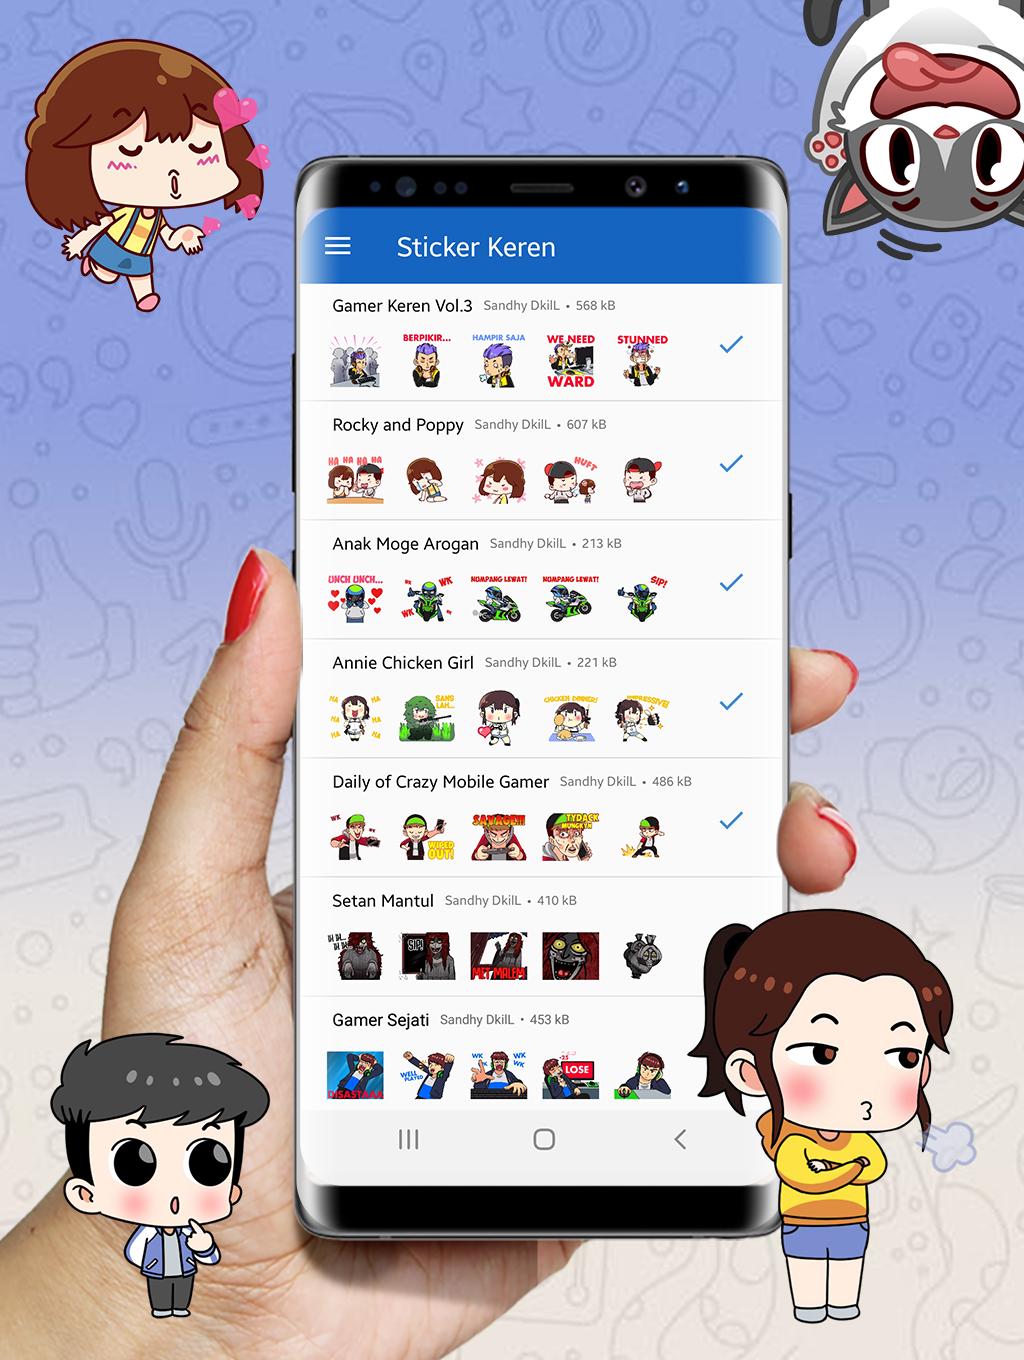 Kumpulan Sticker Keren Wastickerapps For Android Apk Download